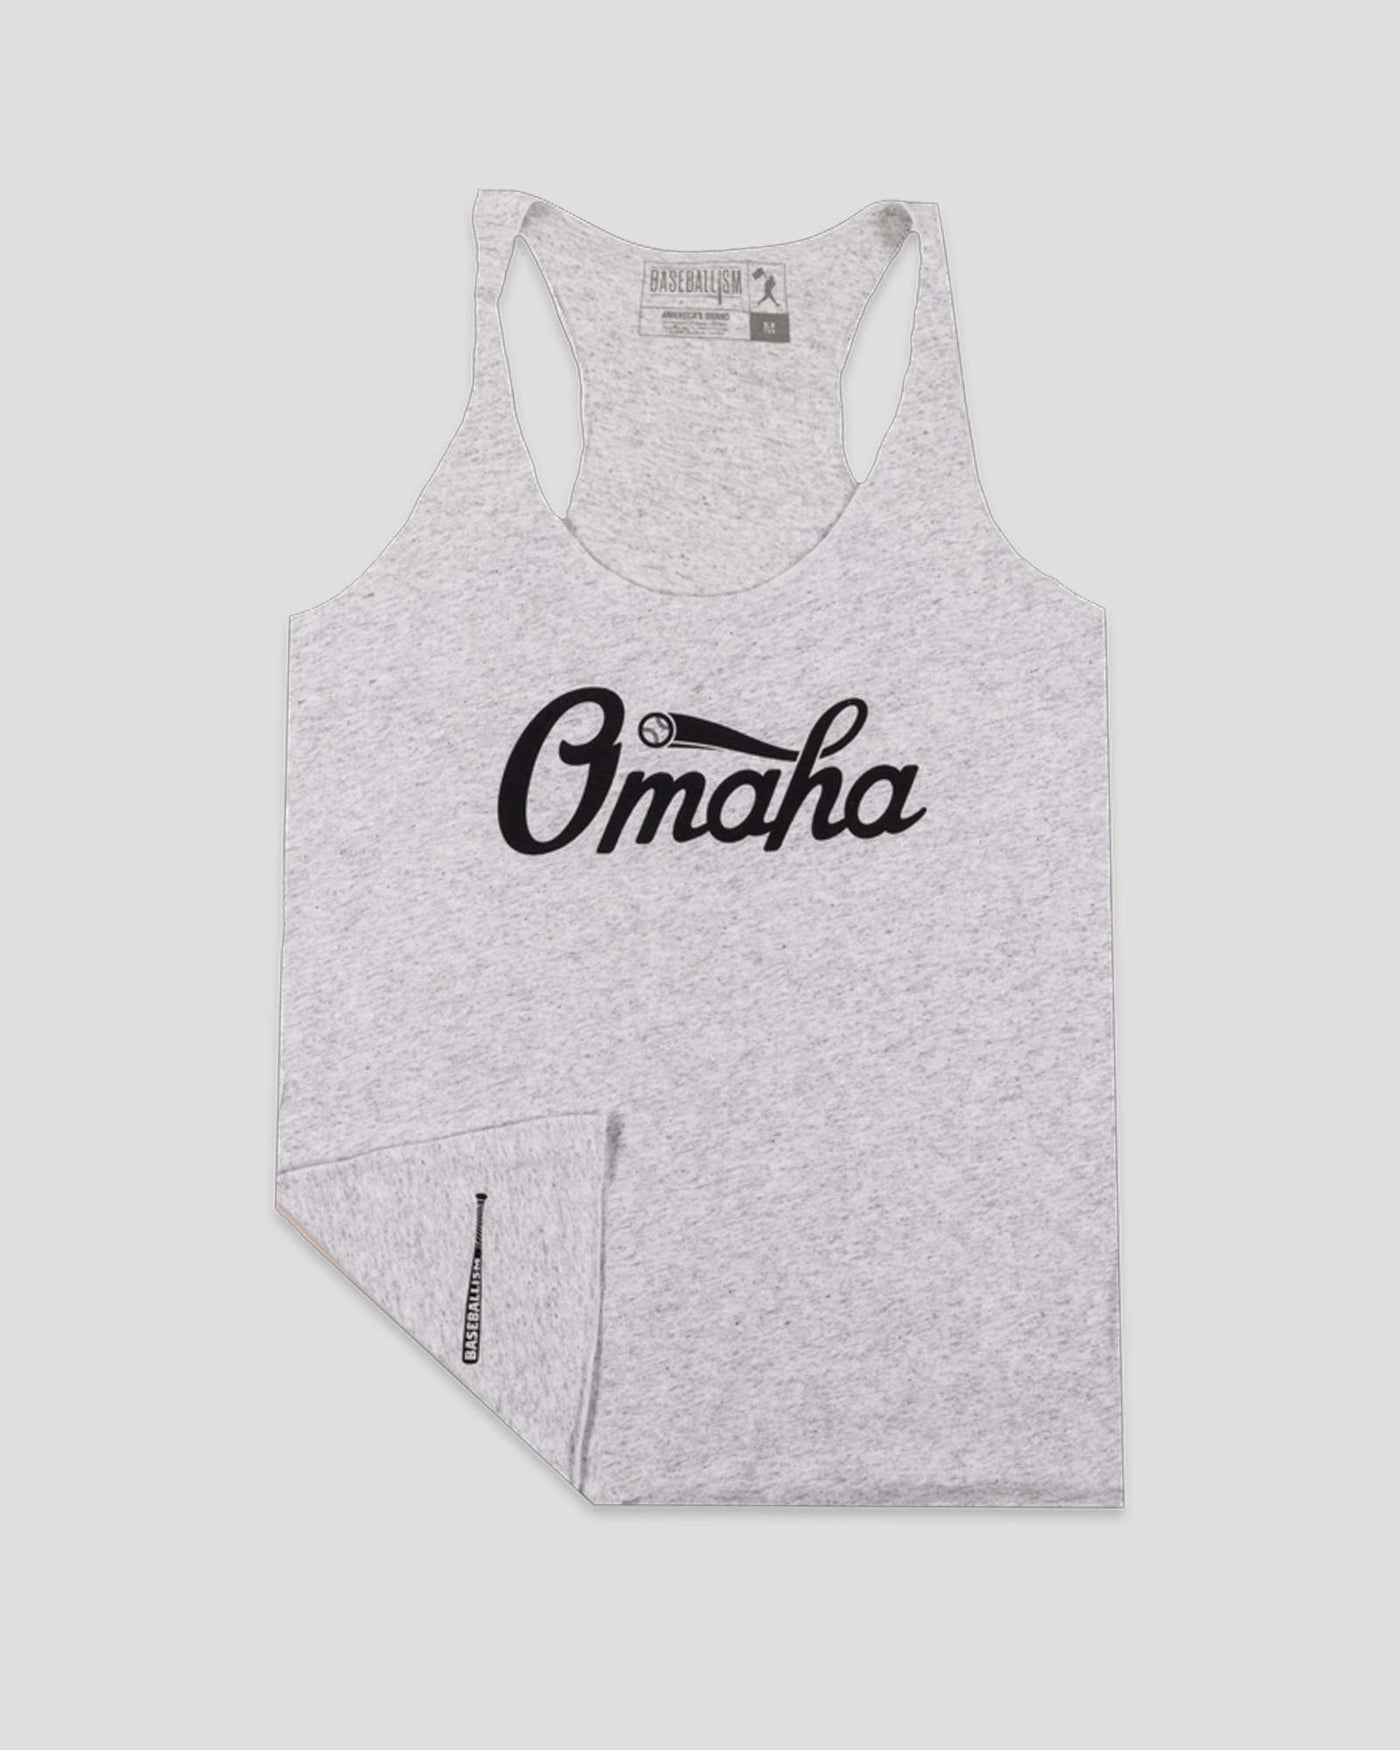 Camiseta sin mangas Omaha Script - Azul marino y blanco